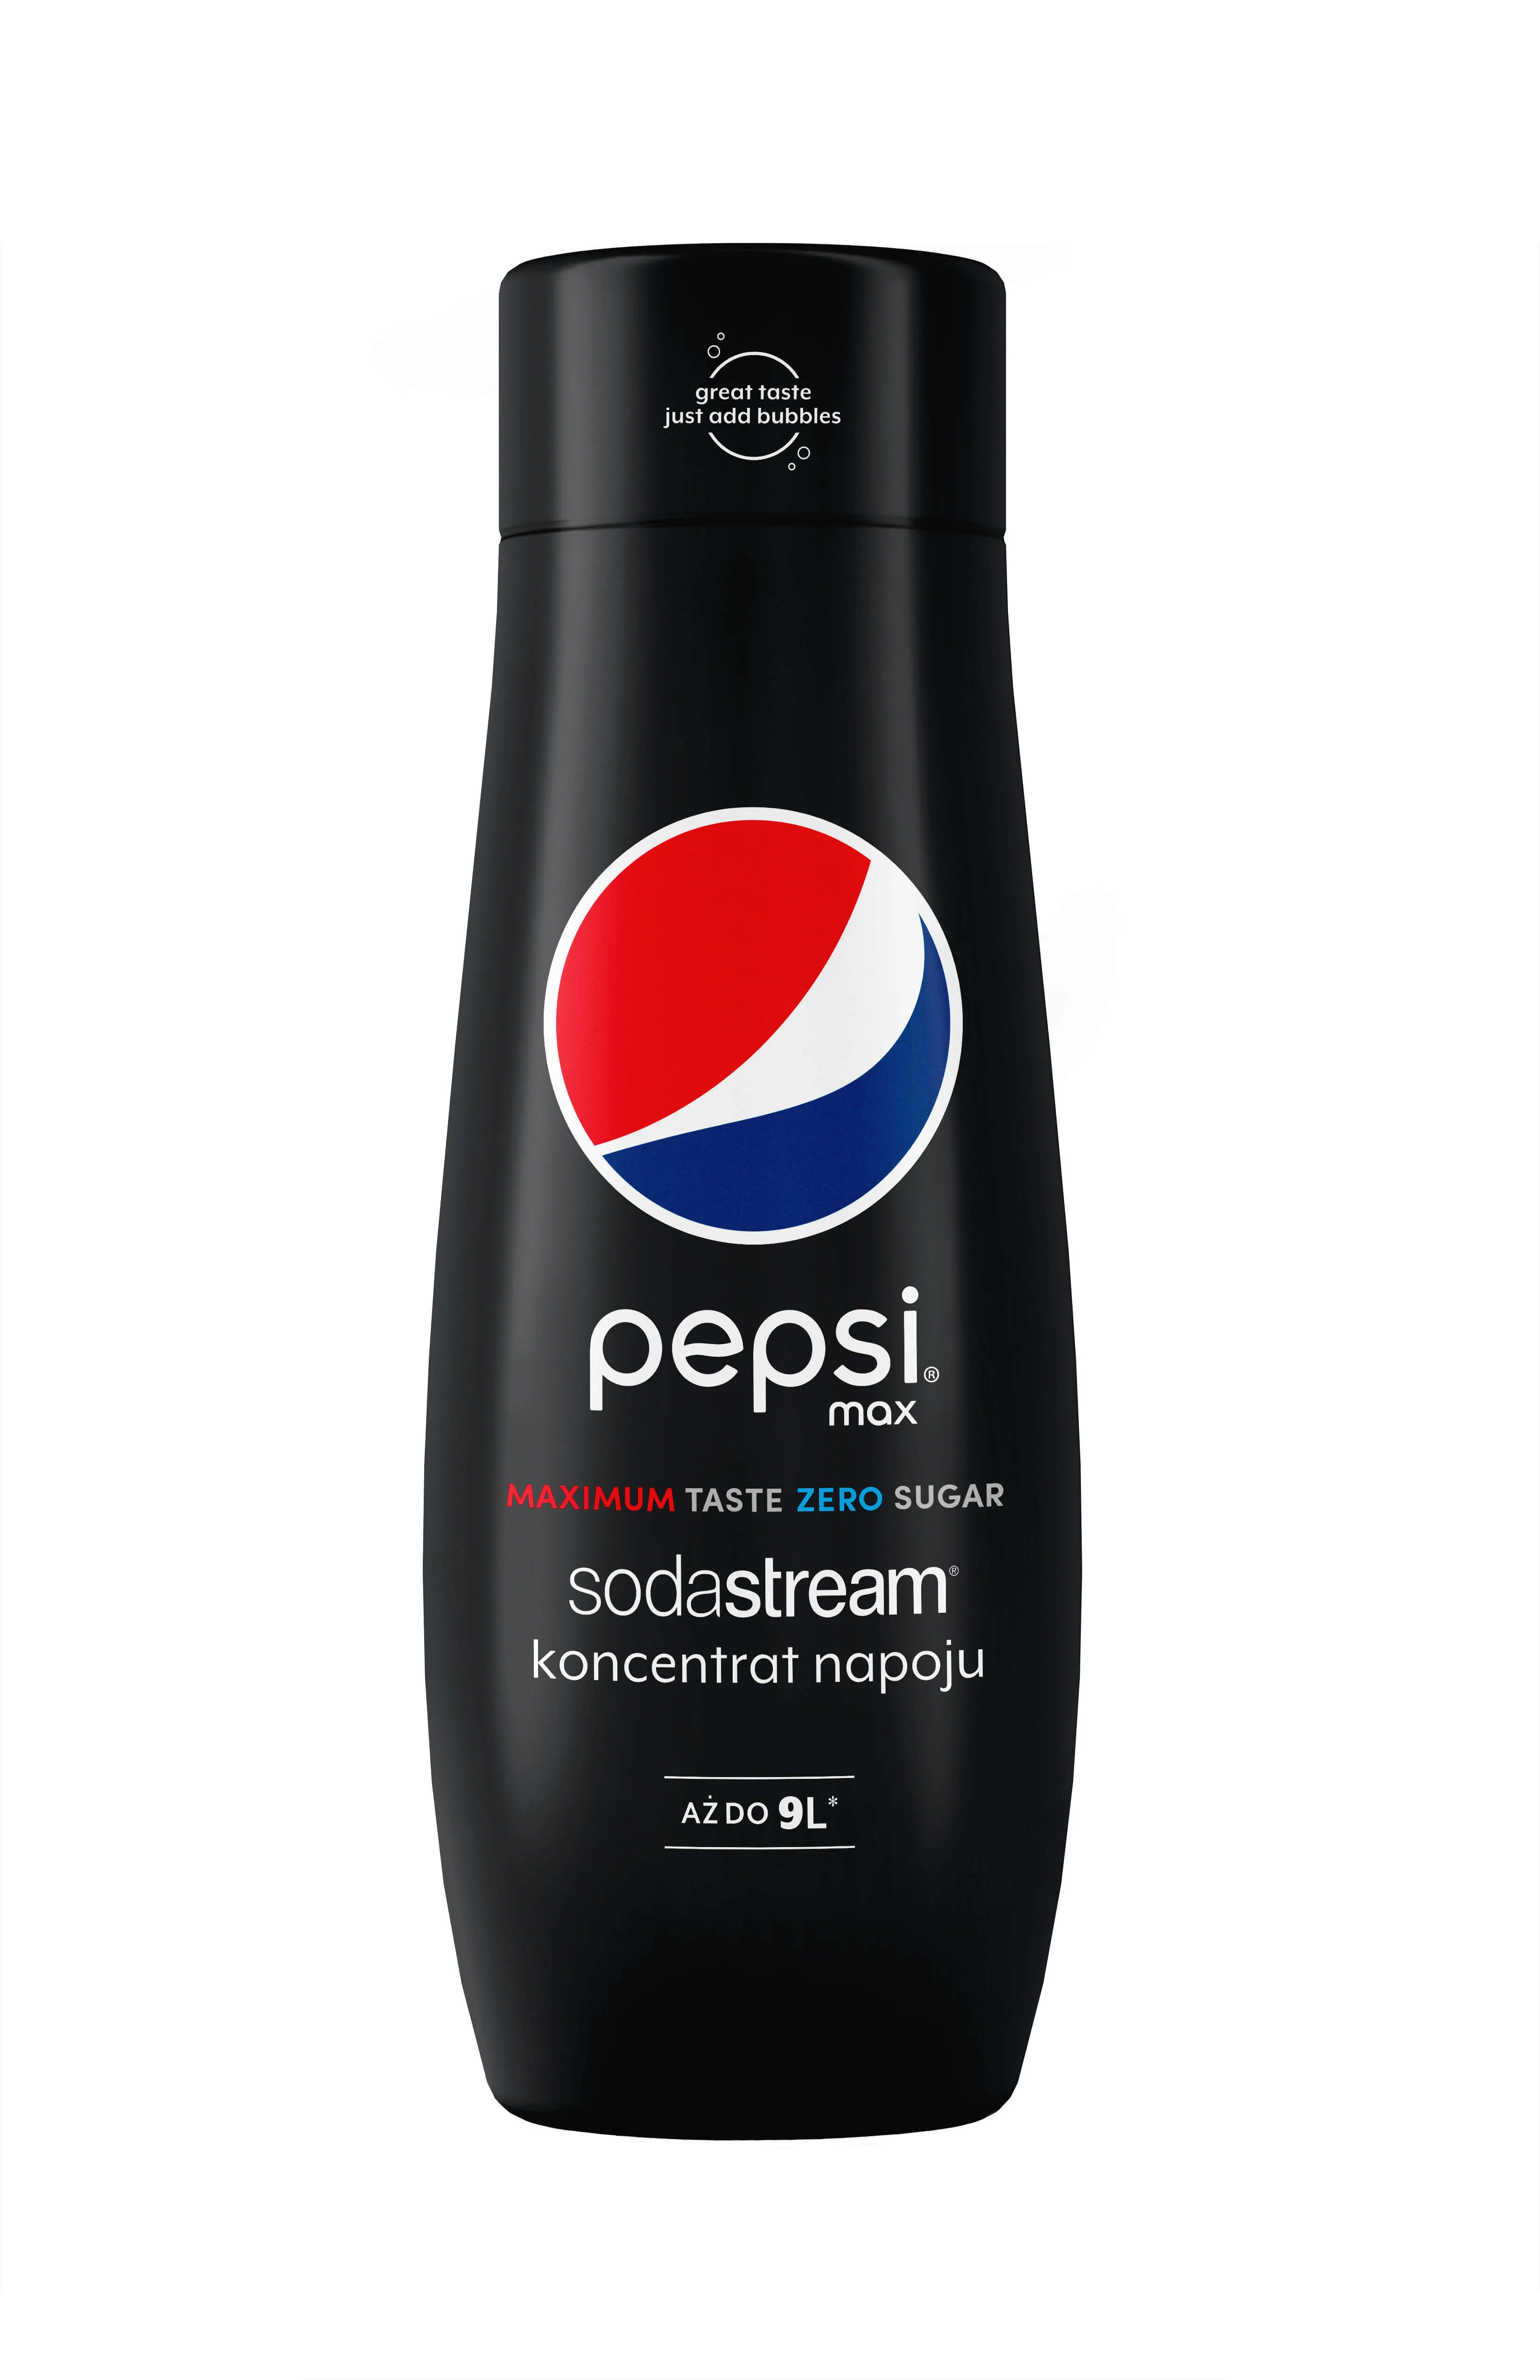 SodaStream Syrop Pepsi Max bez cukru do napojów, 440 ml 